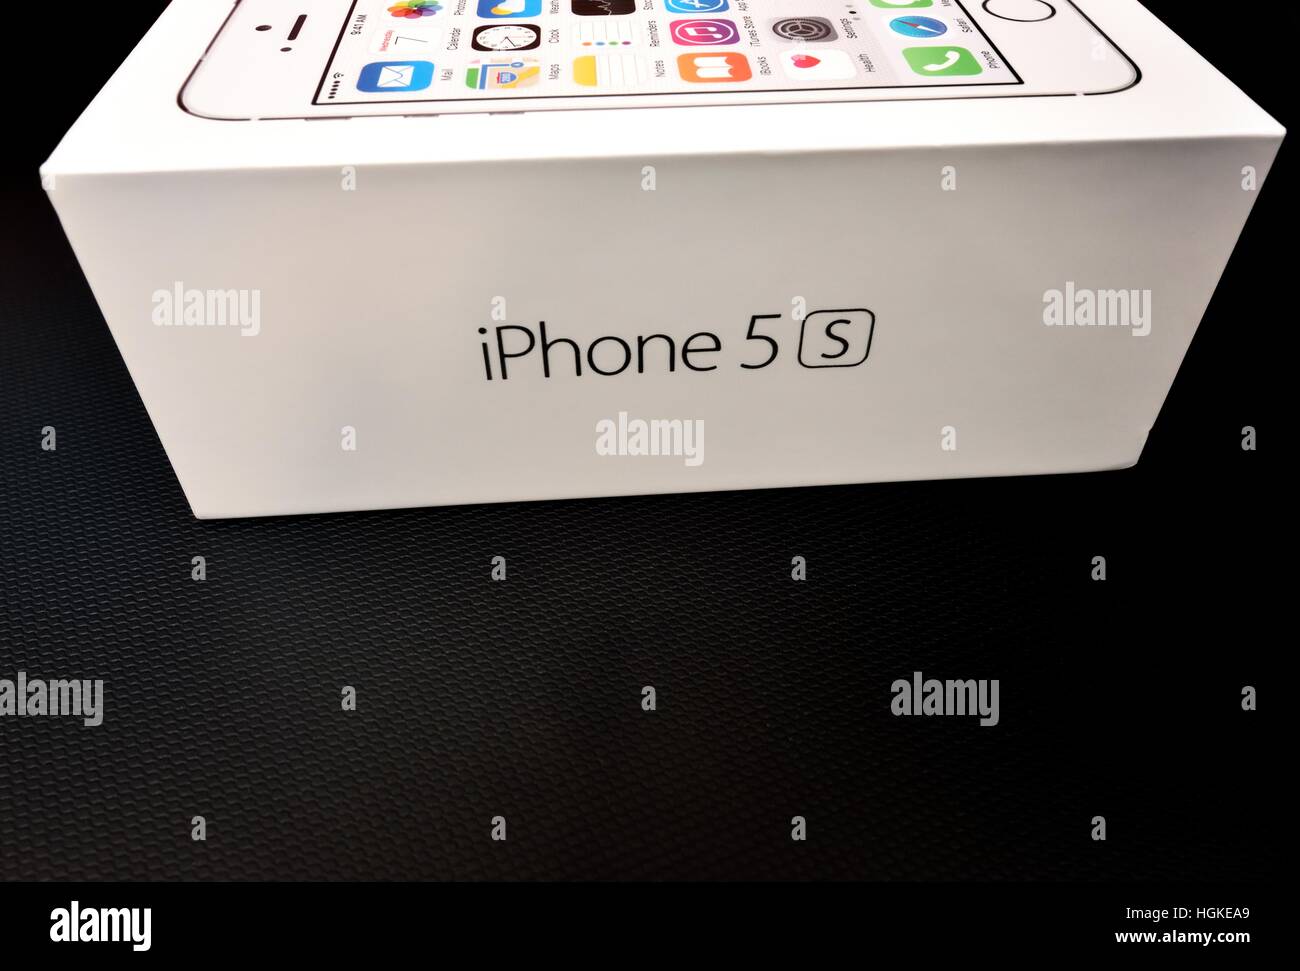 Apple iphone 5s retail box Stock Photo